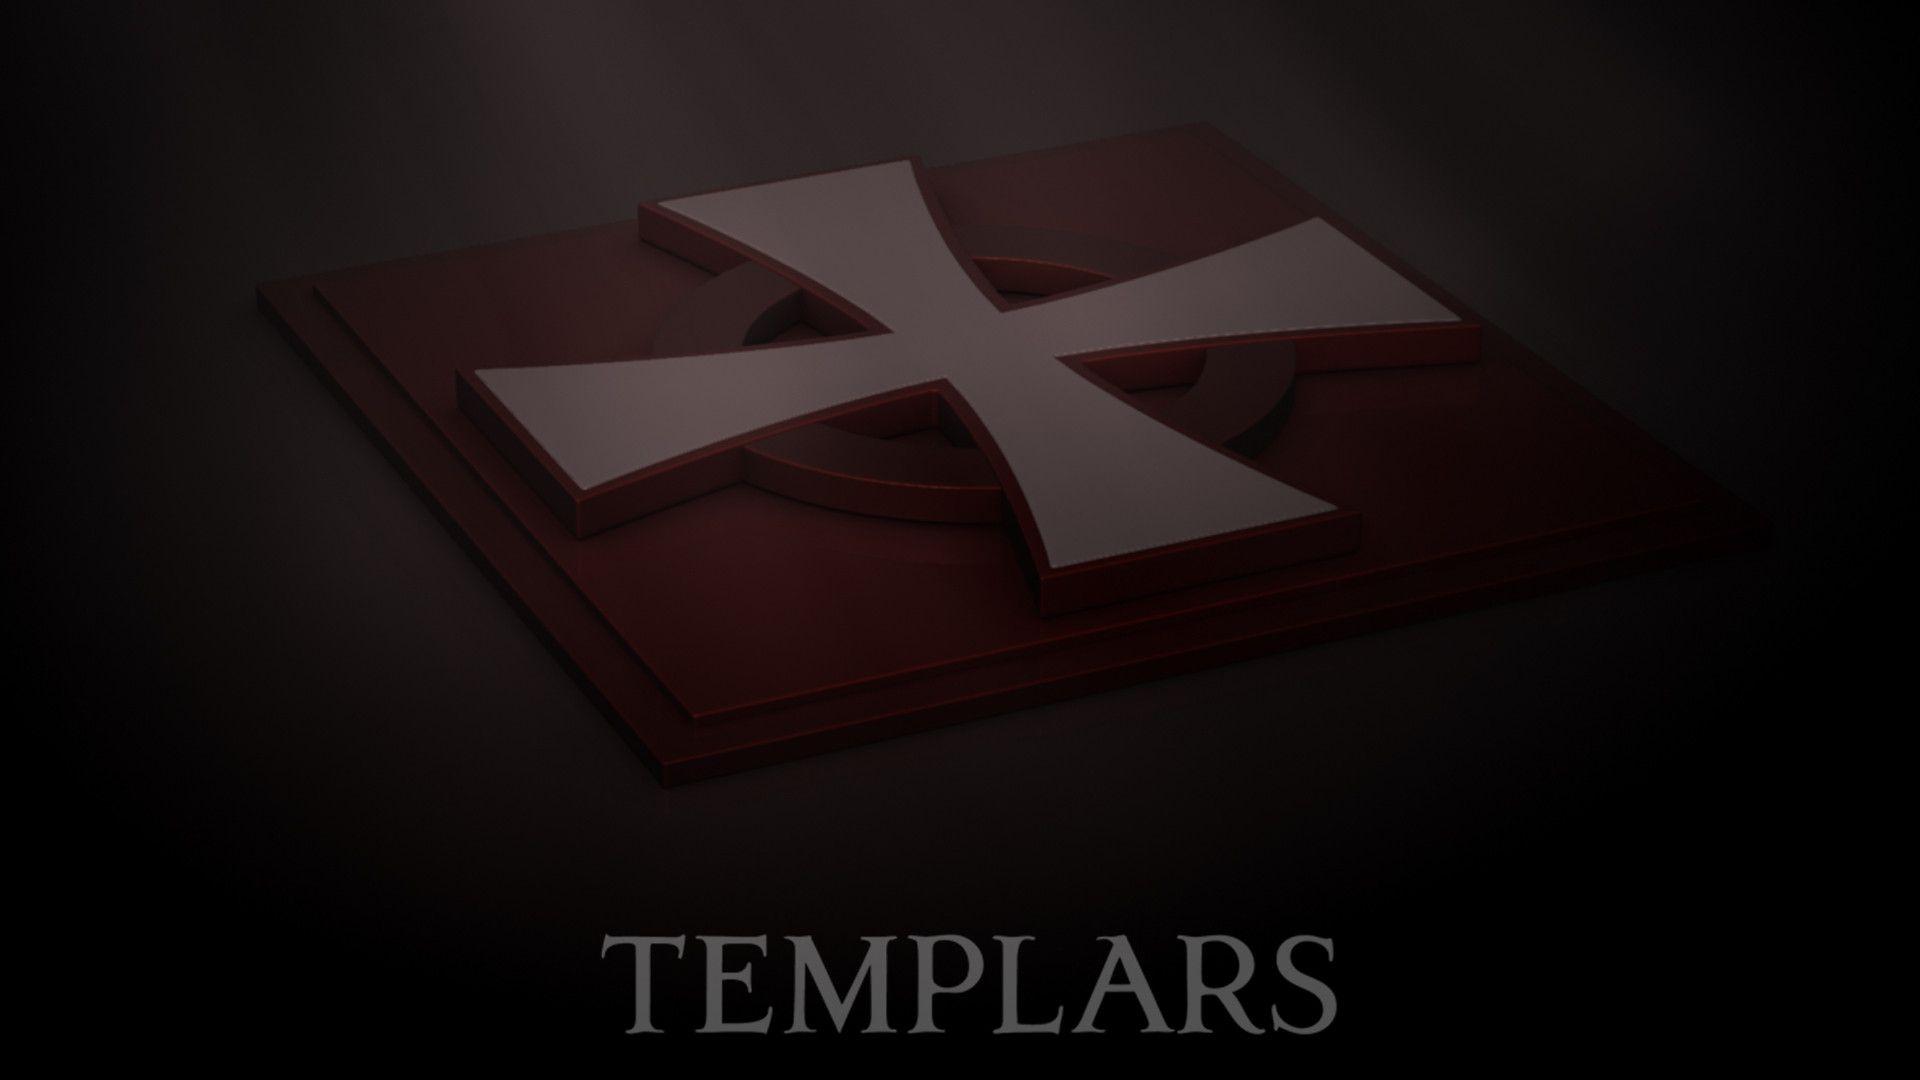 My Templar wallpaper.